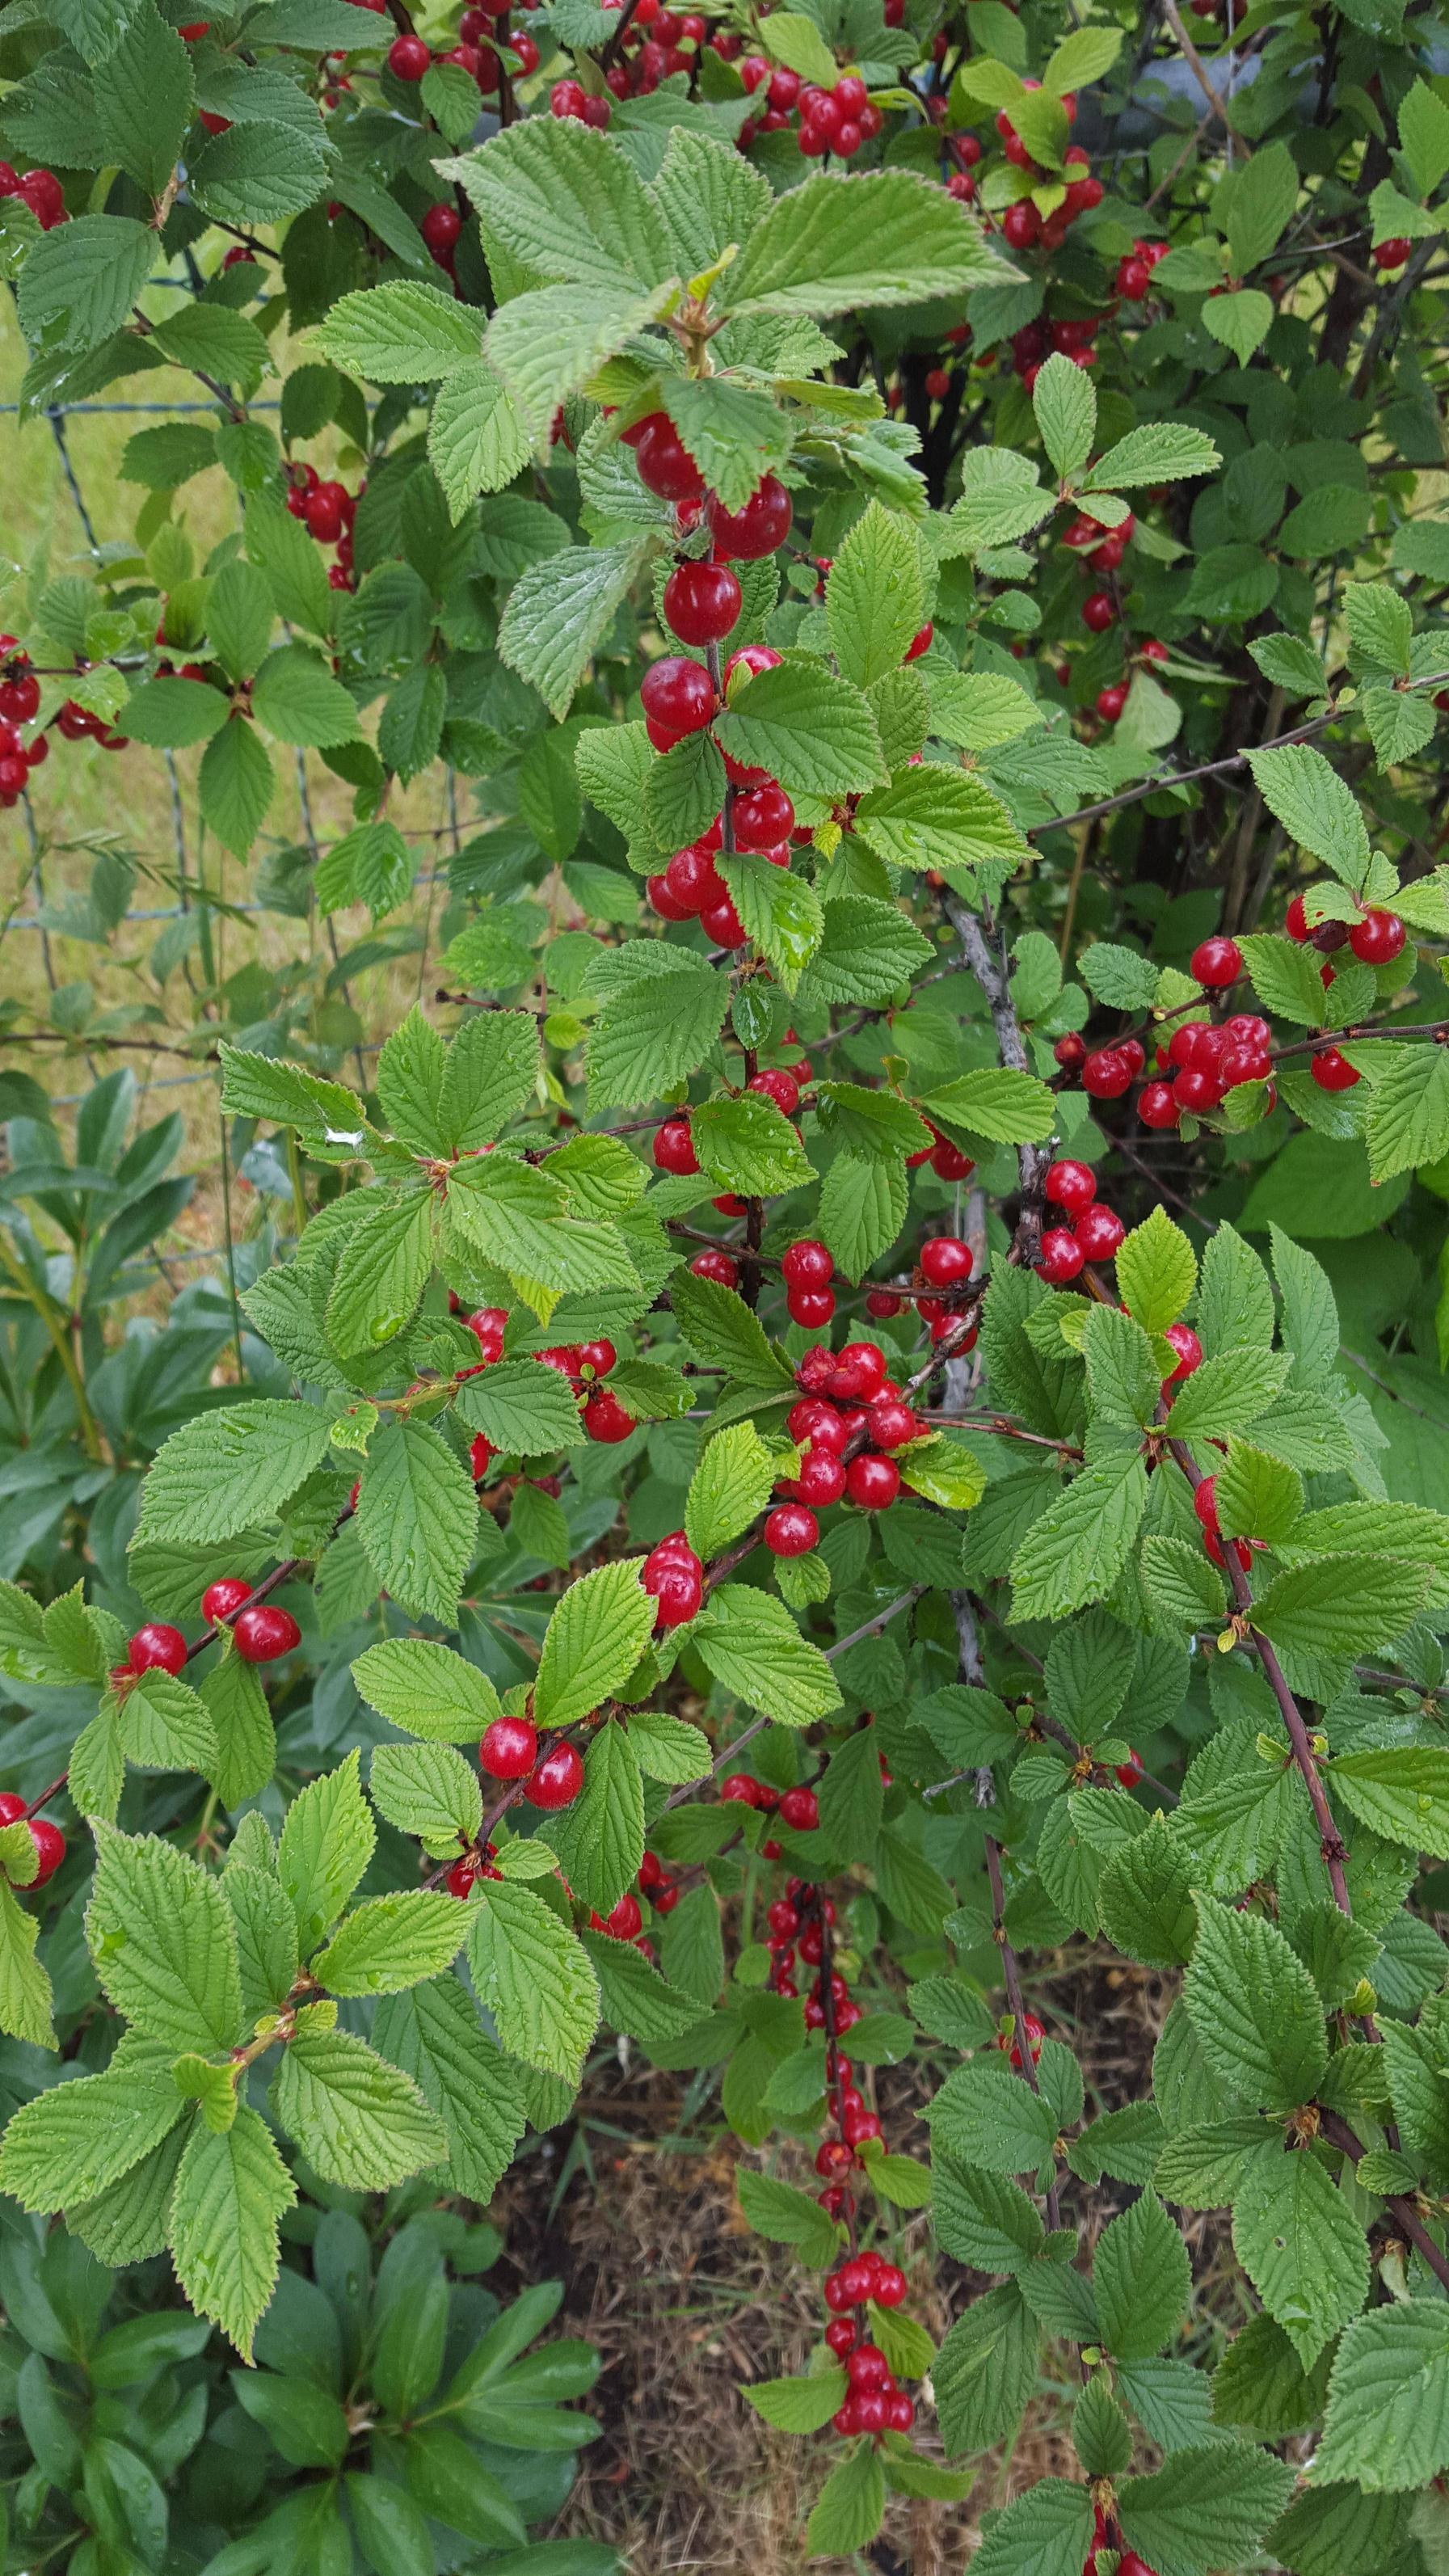 Calgary] [Wild] Small bush with invitingly red berries. : whatsthisplant